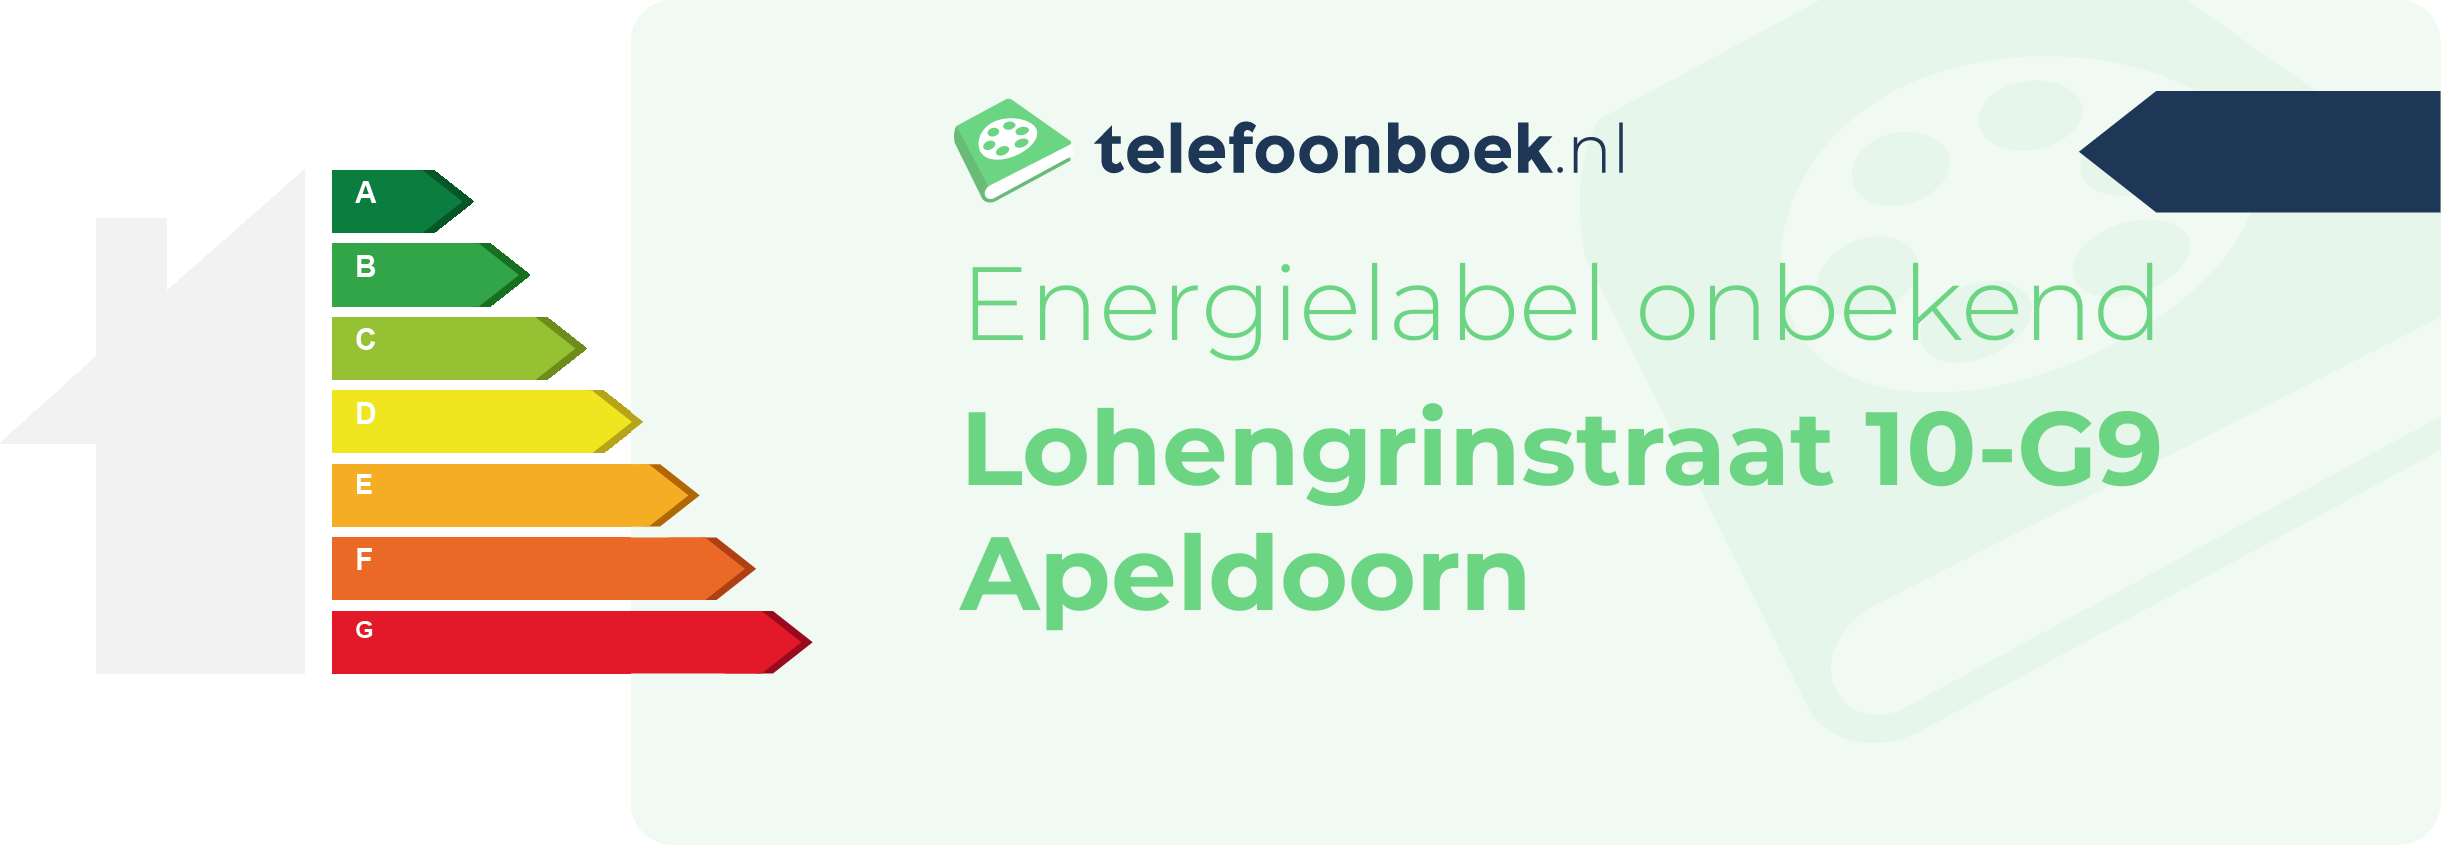 Energielabel Lohengrinstraat 10-G9 Apeldoorn